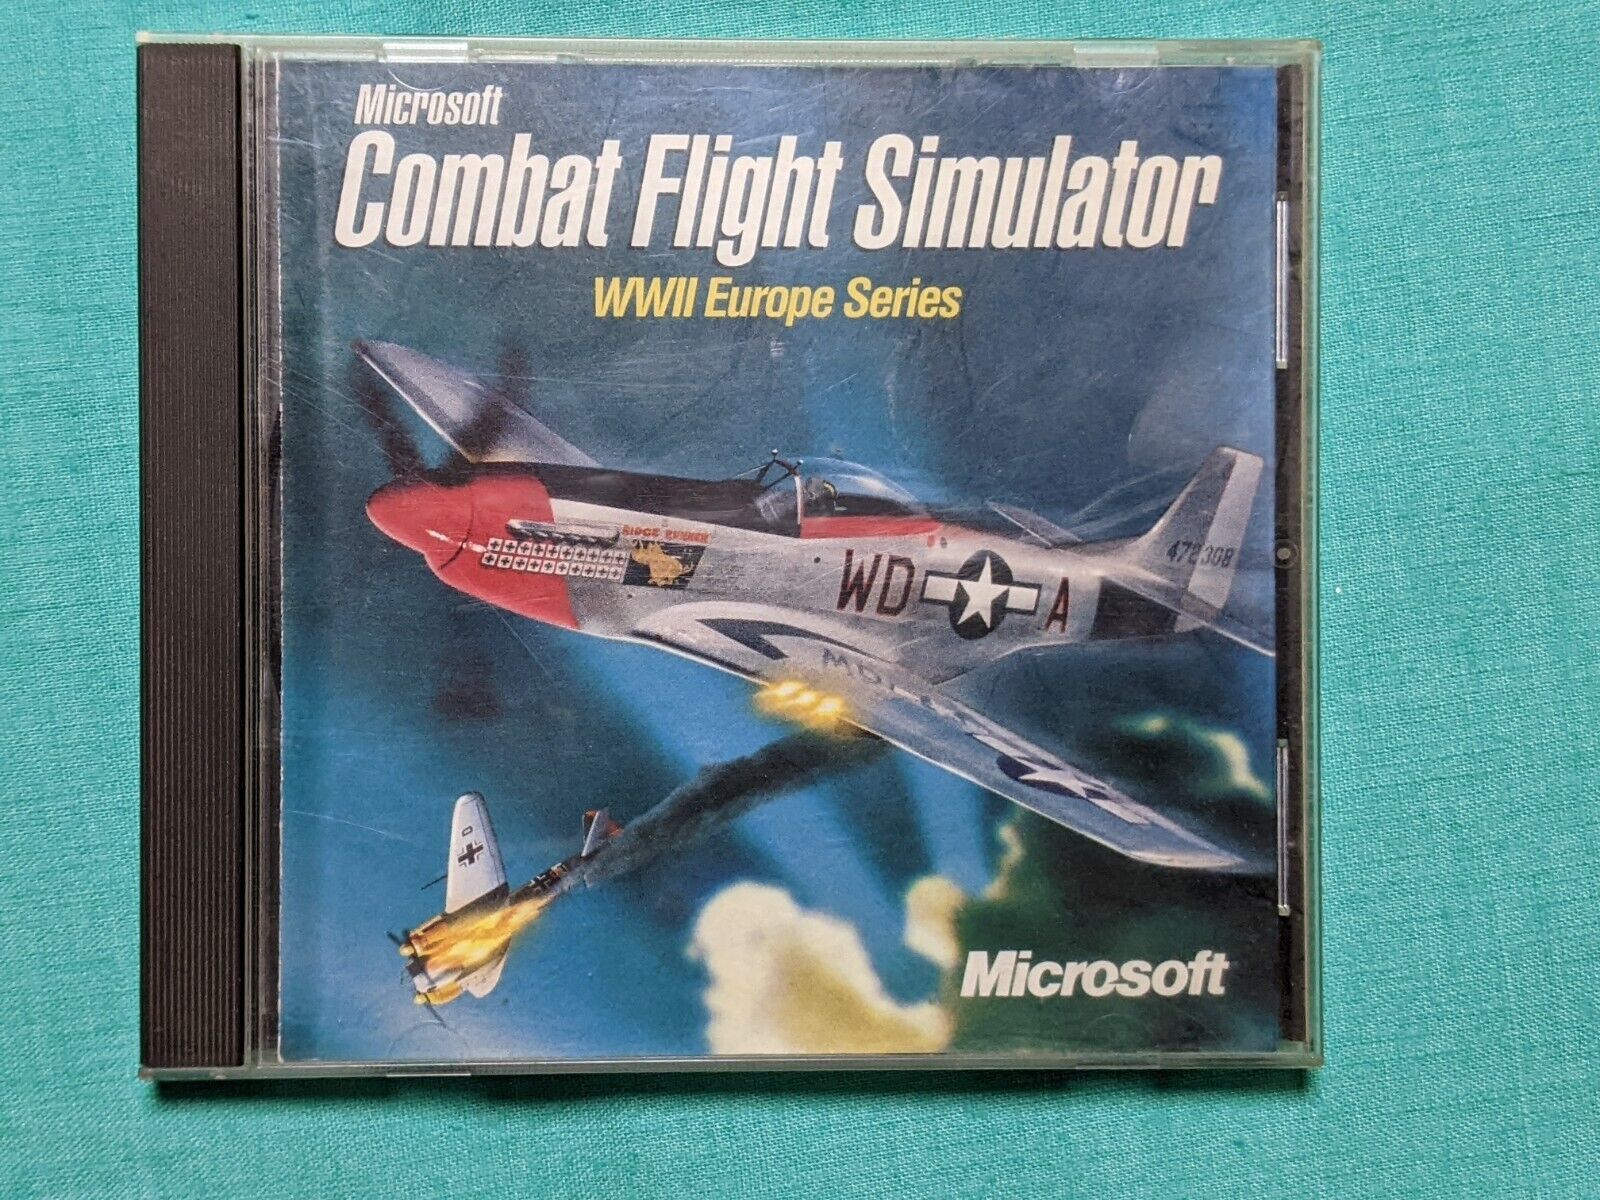  1998 Microsoft Combat Flight Simulator, 1999 Microsoft Flight Simulator 2000 